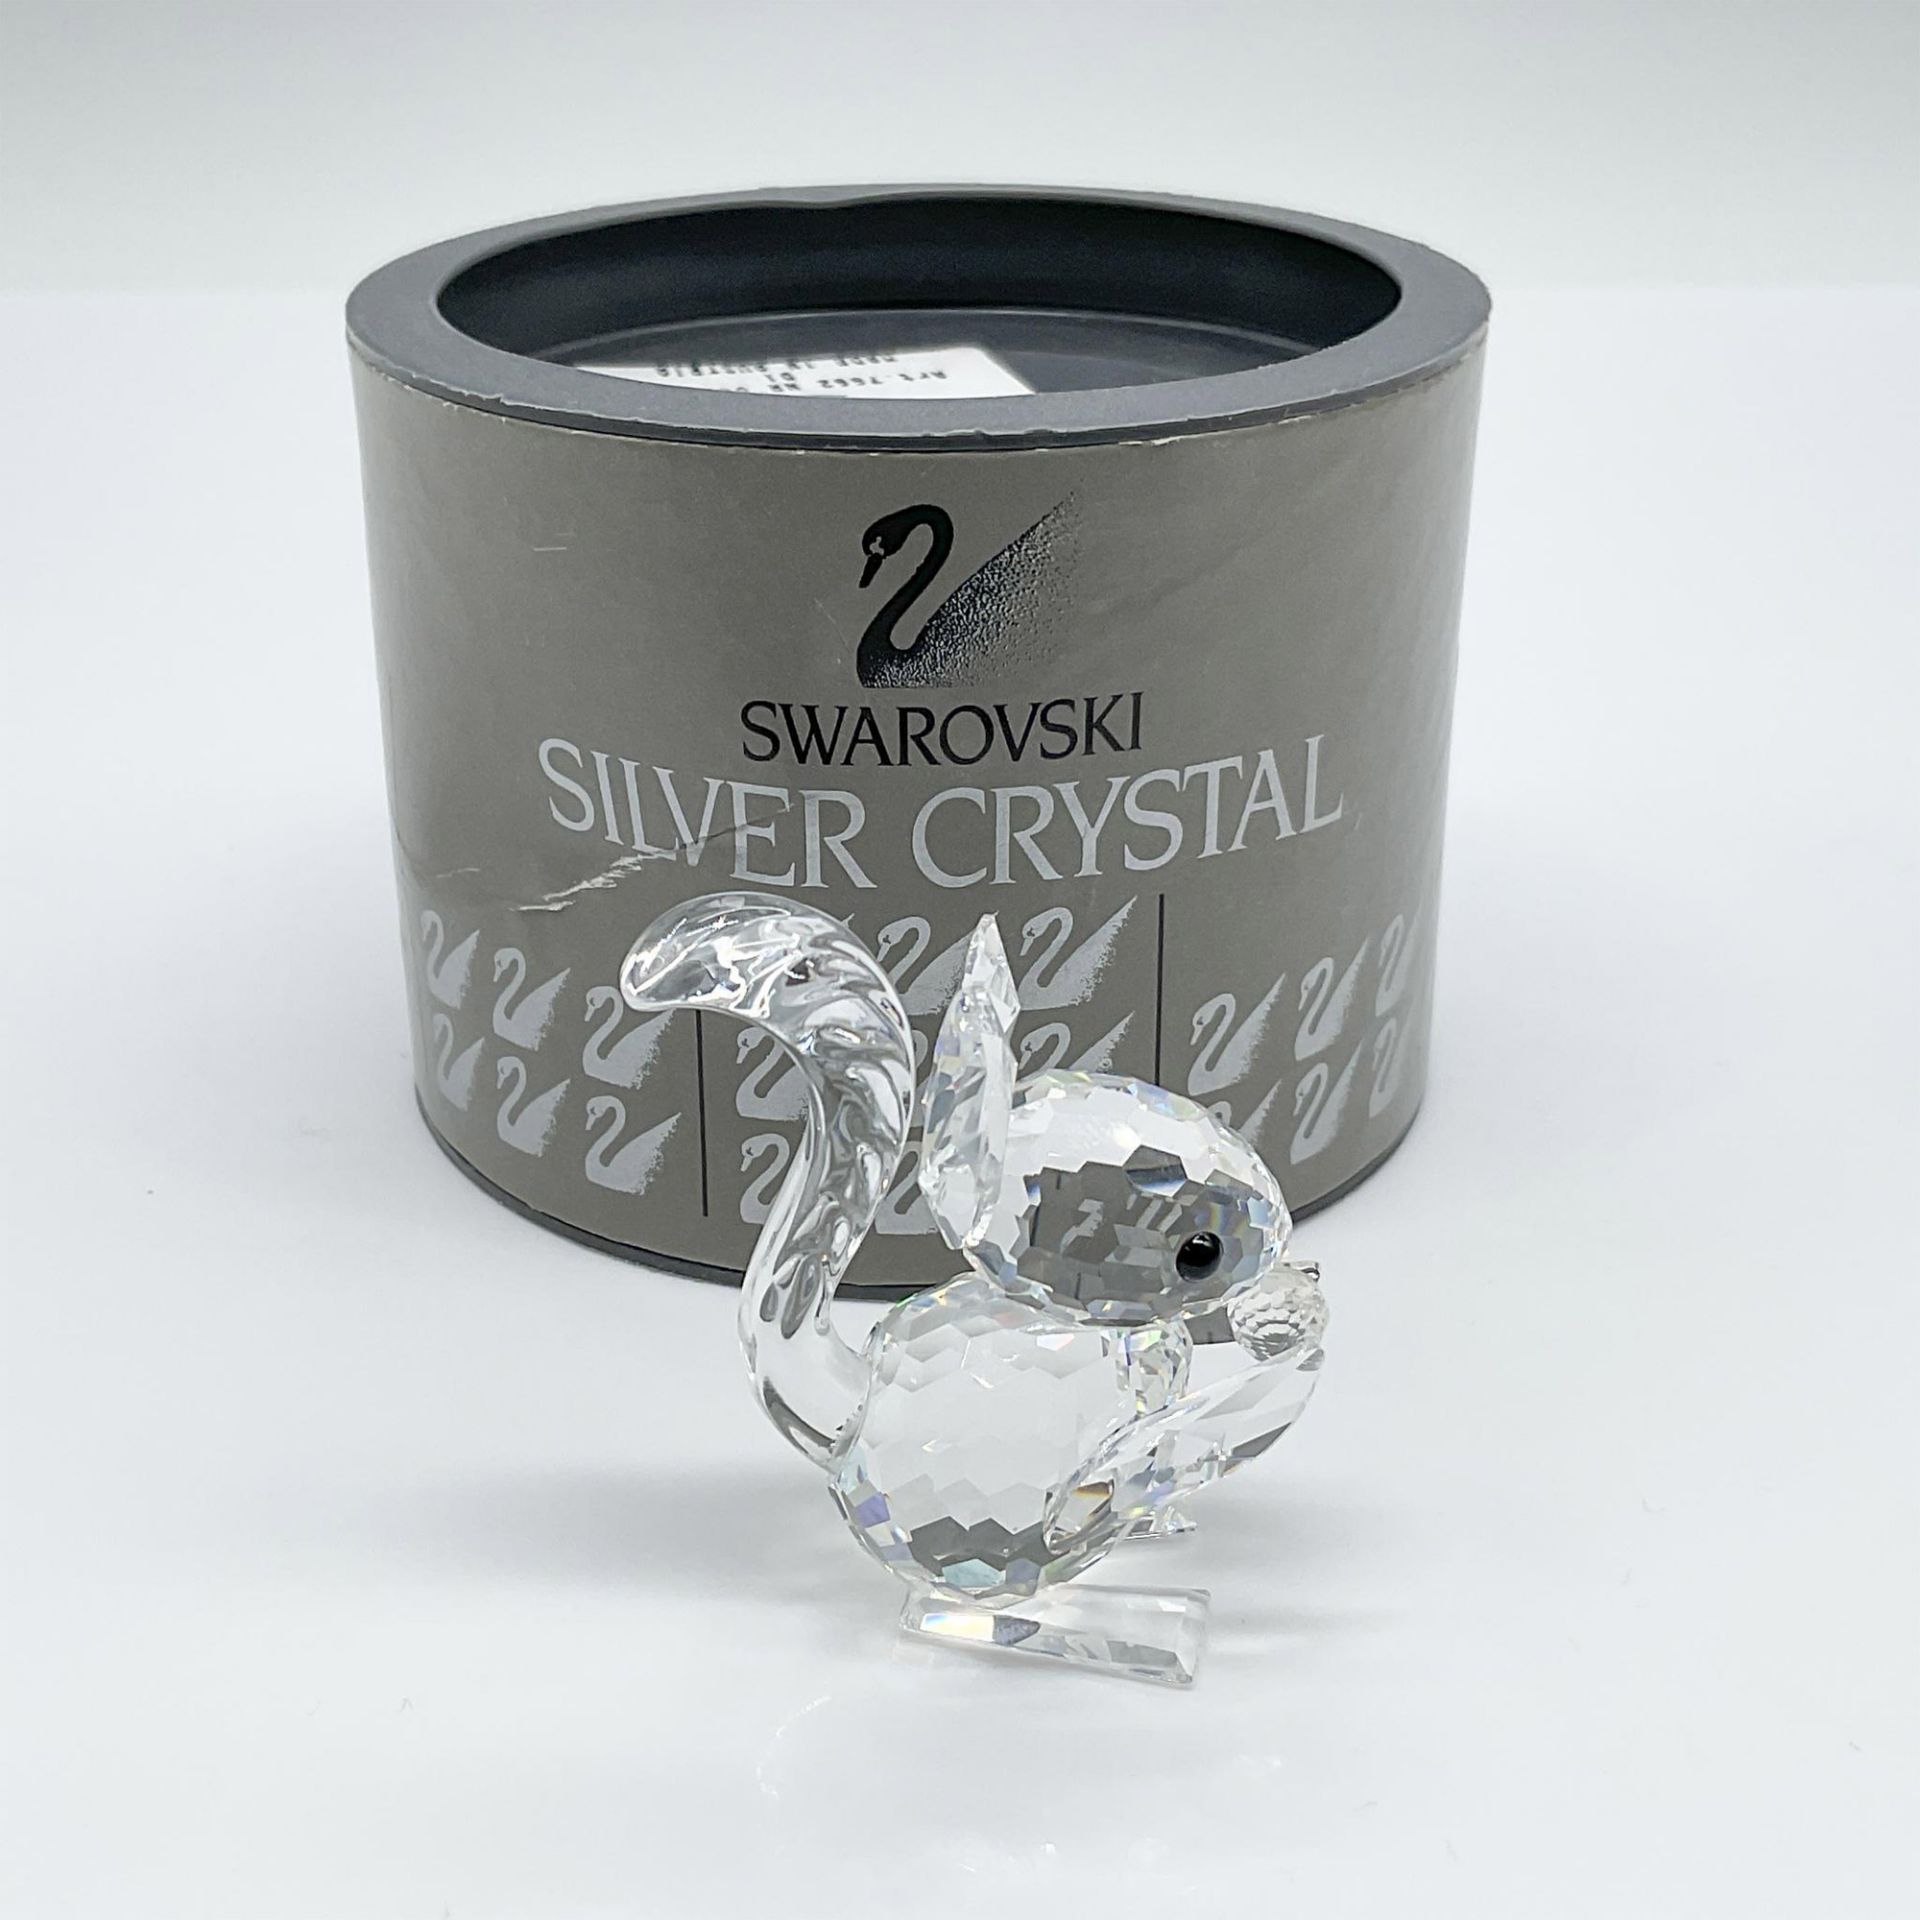 Swarovski Silver Crystal Figurine, Squirrel Long Ears - Image 4 of 4